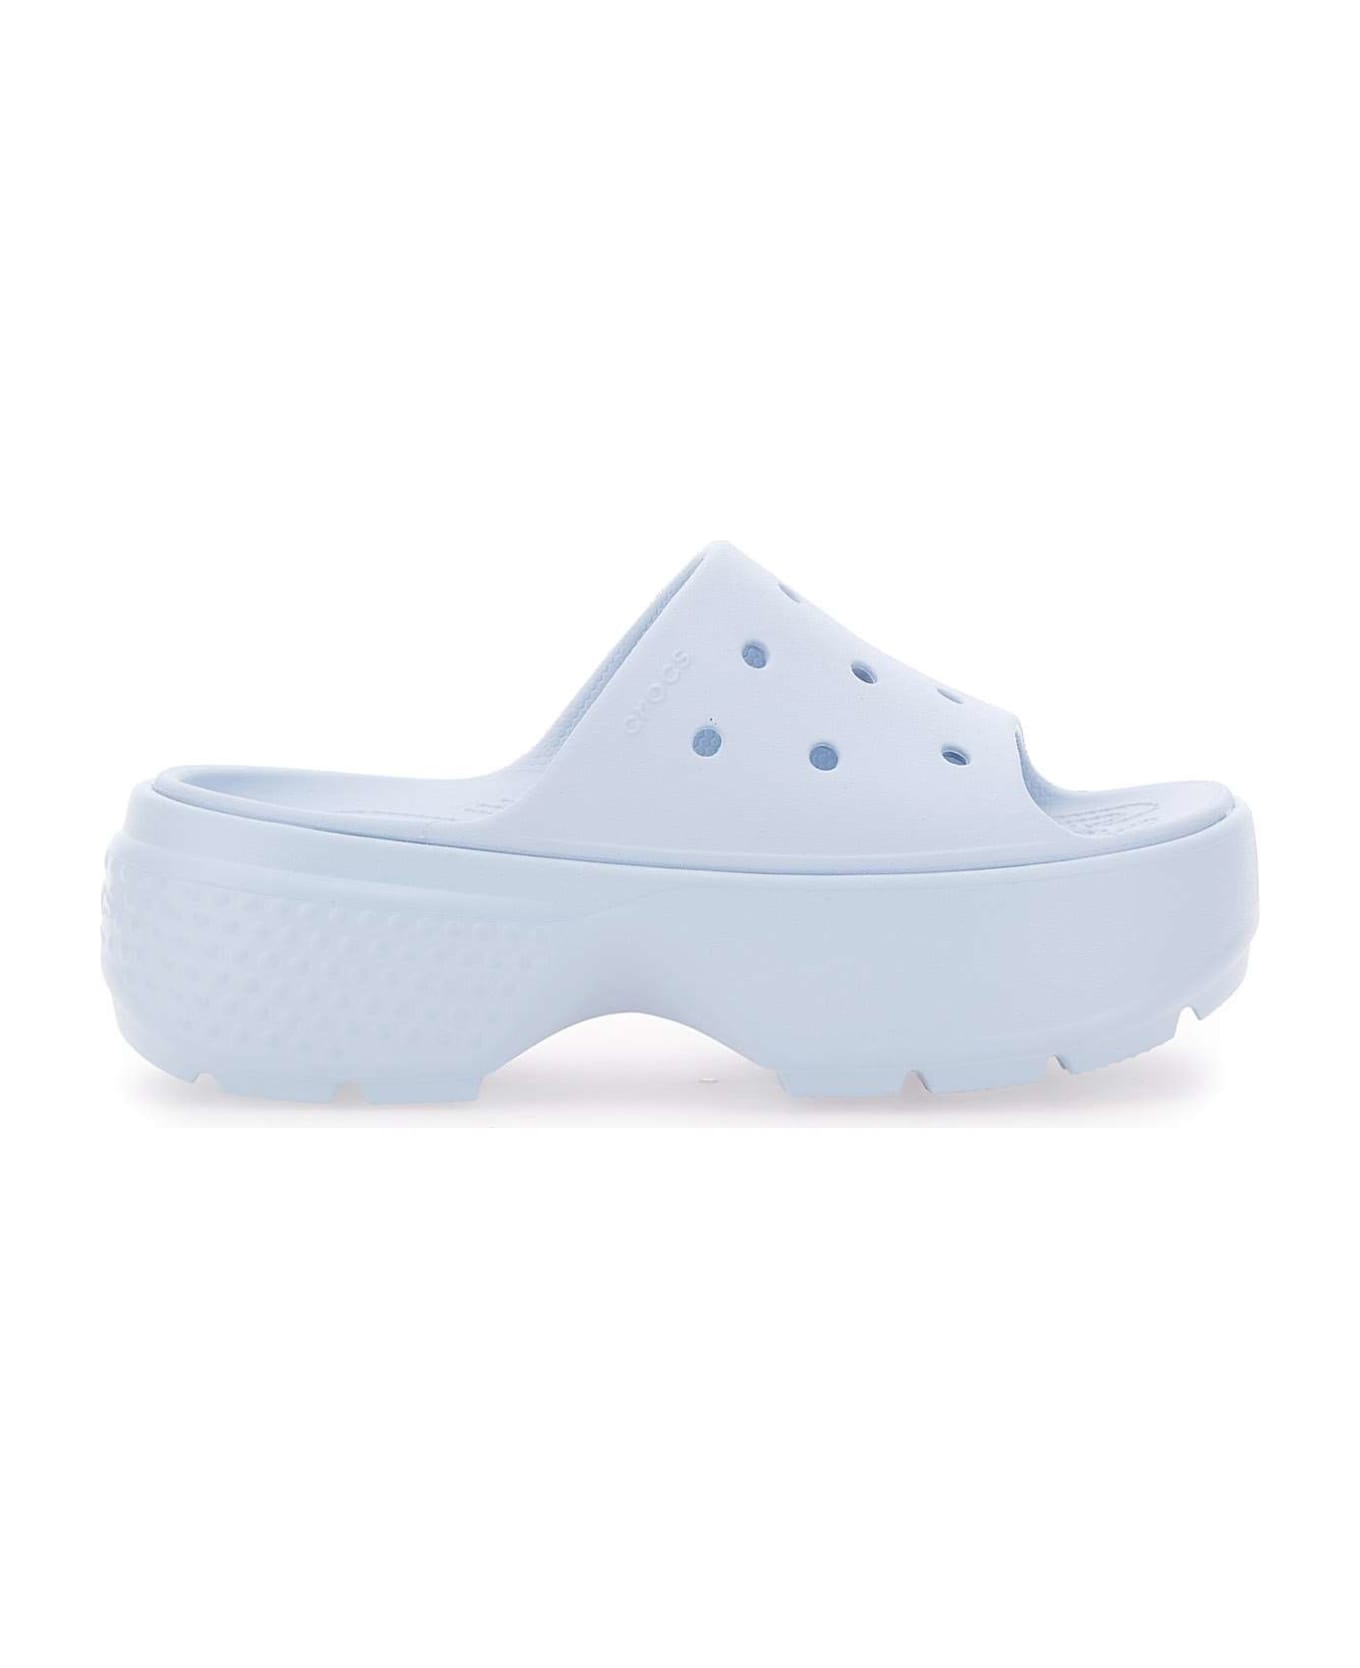 Crocs "stomp Slide" Sandals - BLUE